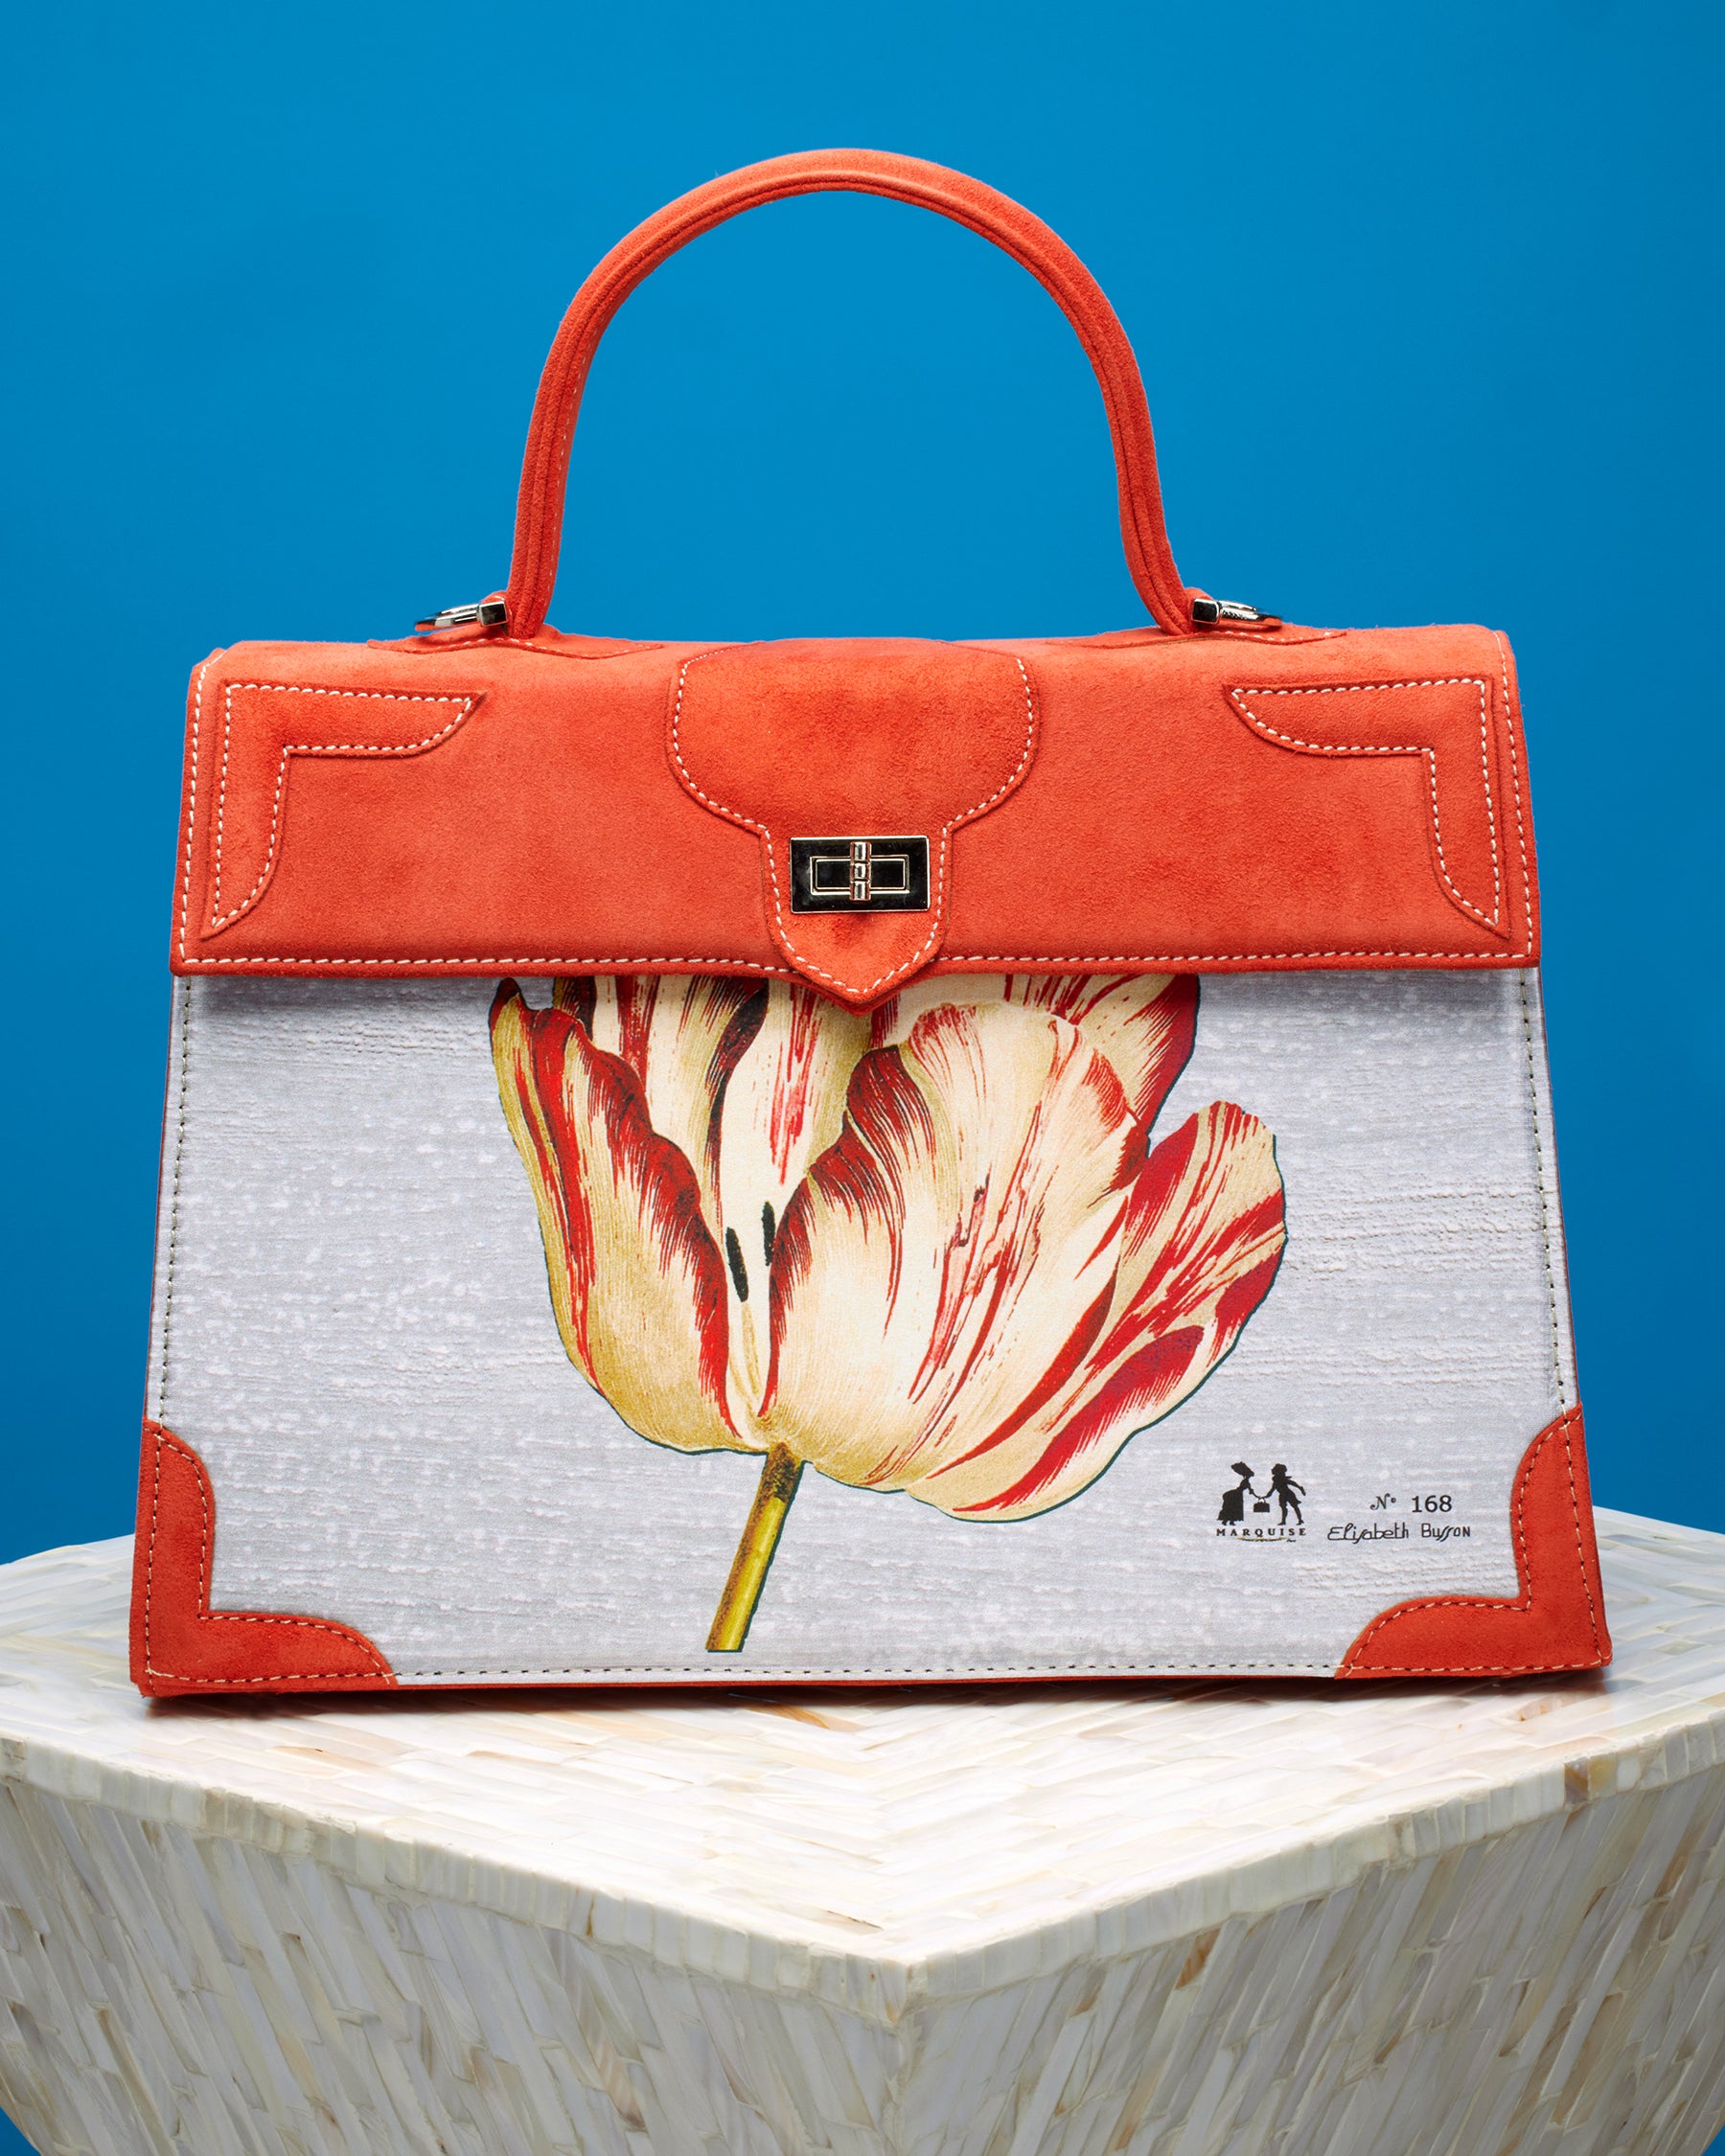 Marquise Paris Tulipe Top Handle Shoulder Bag in Red Coral